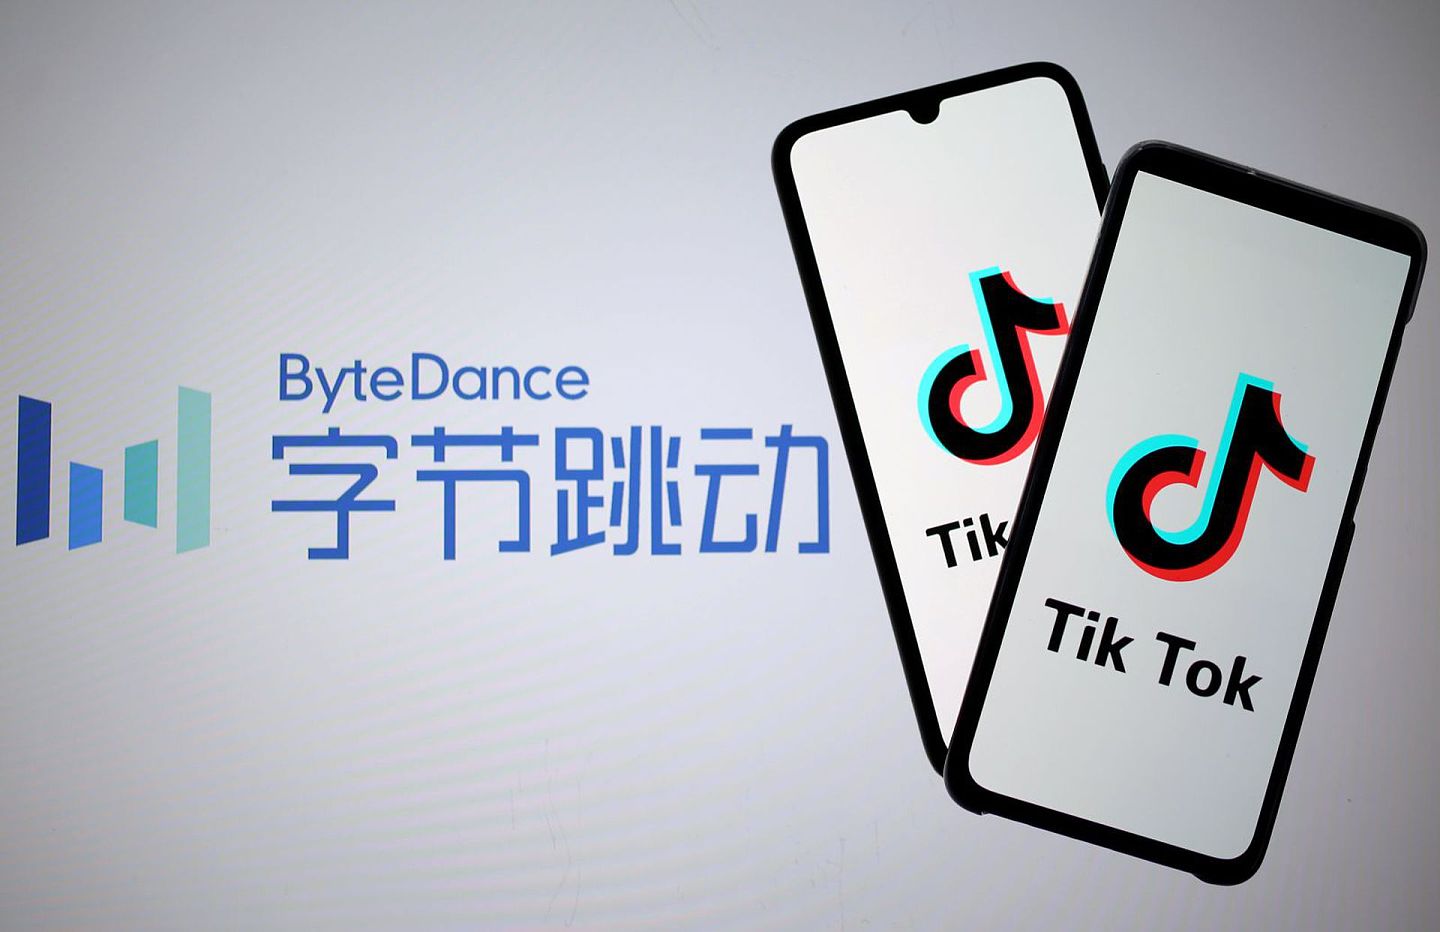 TikTok是字节跳动旗下短视频社交平台，2017年5月上线，愿景是“激发创造，带来愉悦”。（路透社）